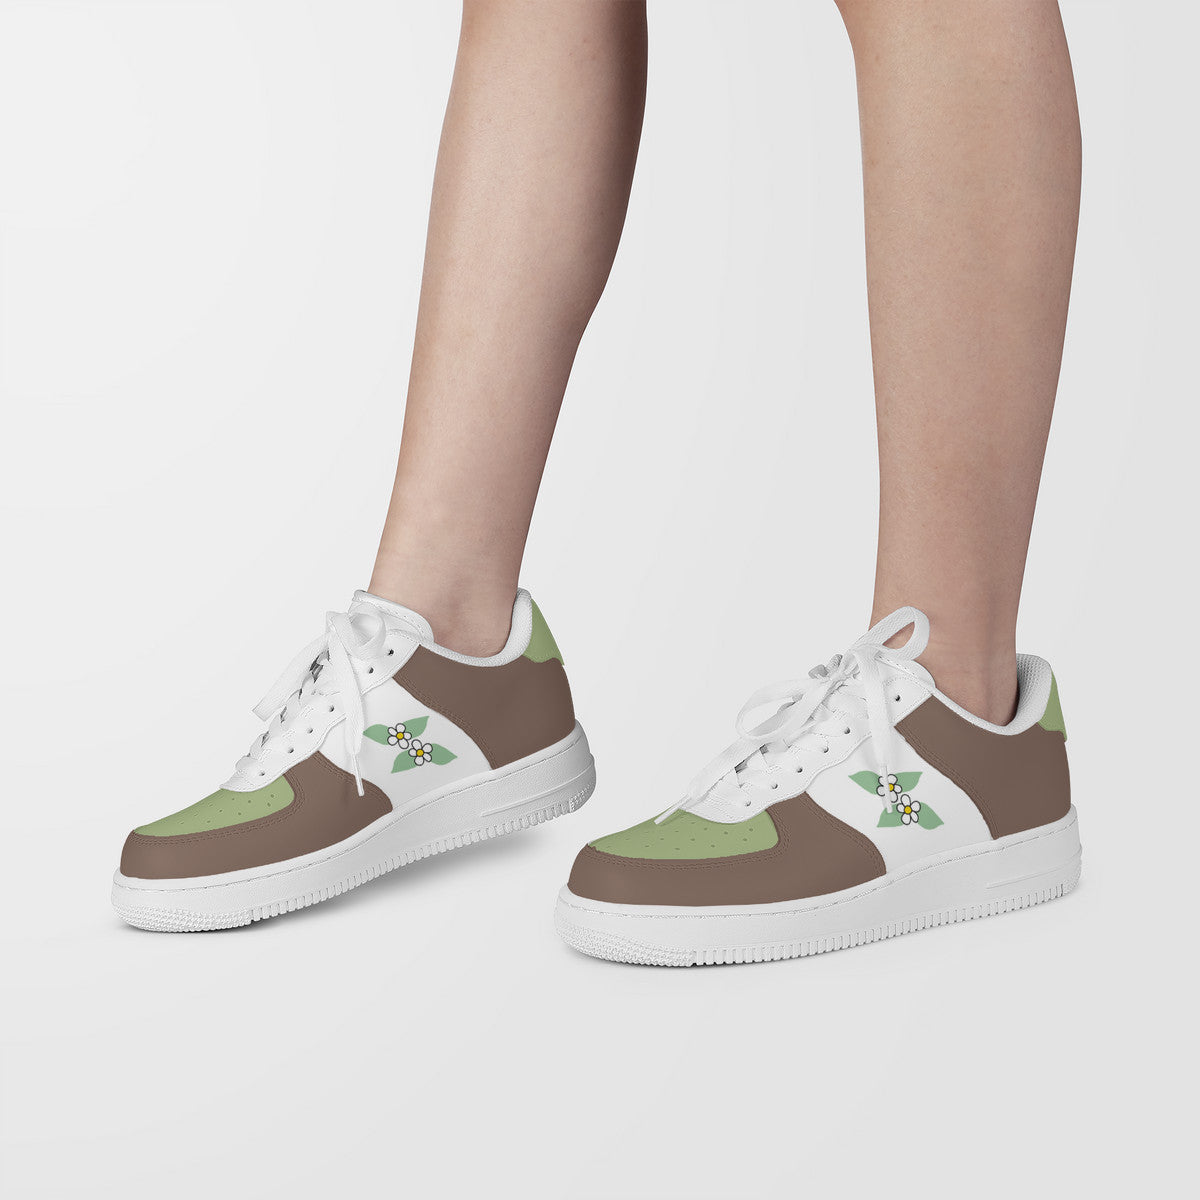 Butterfly | Custom Cool Shoes | Shoe Zero